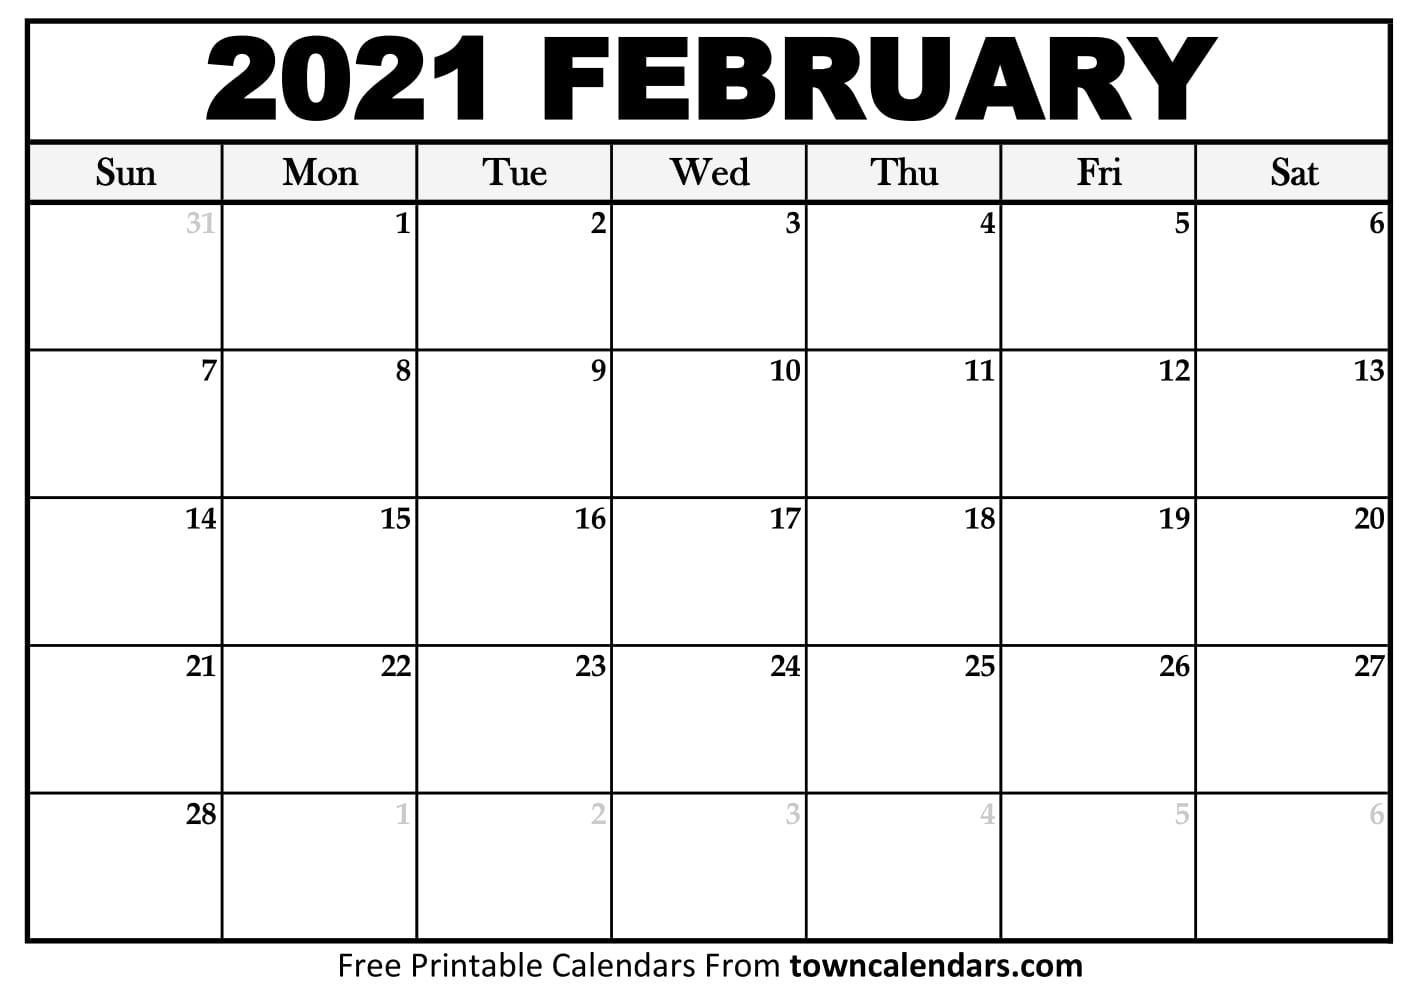 Printable February 2021 Calendar - Towncalendars